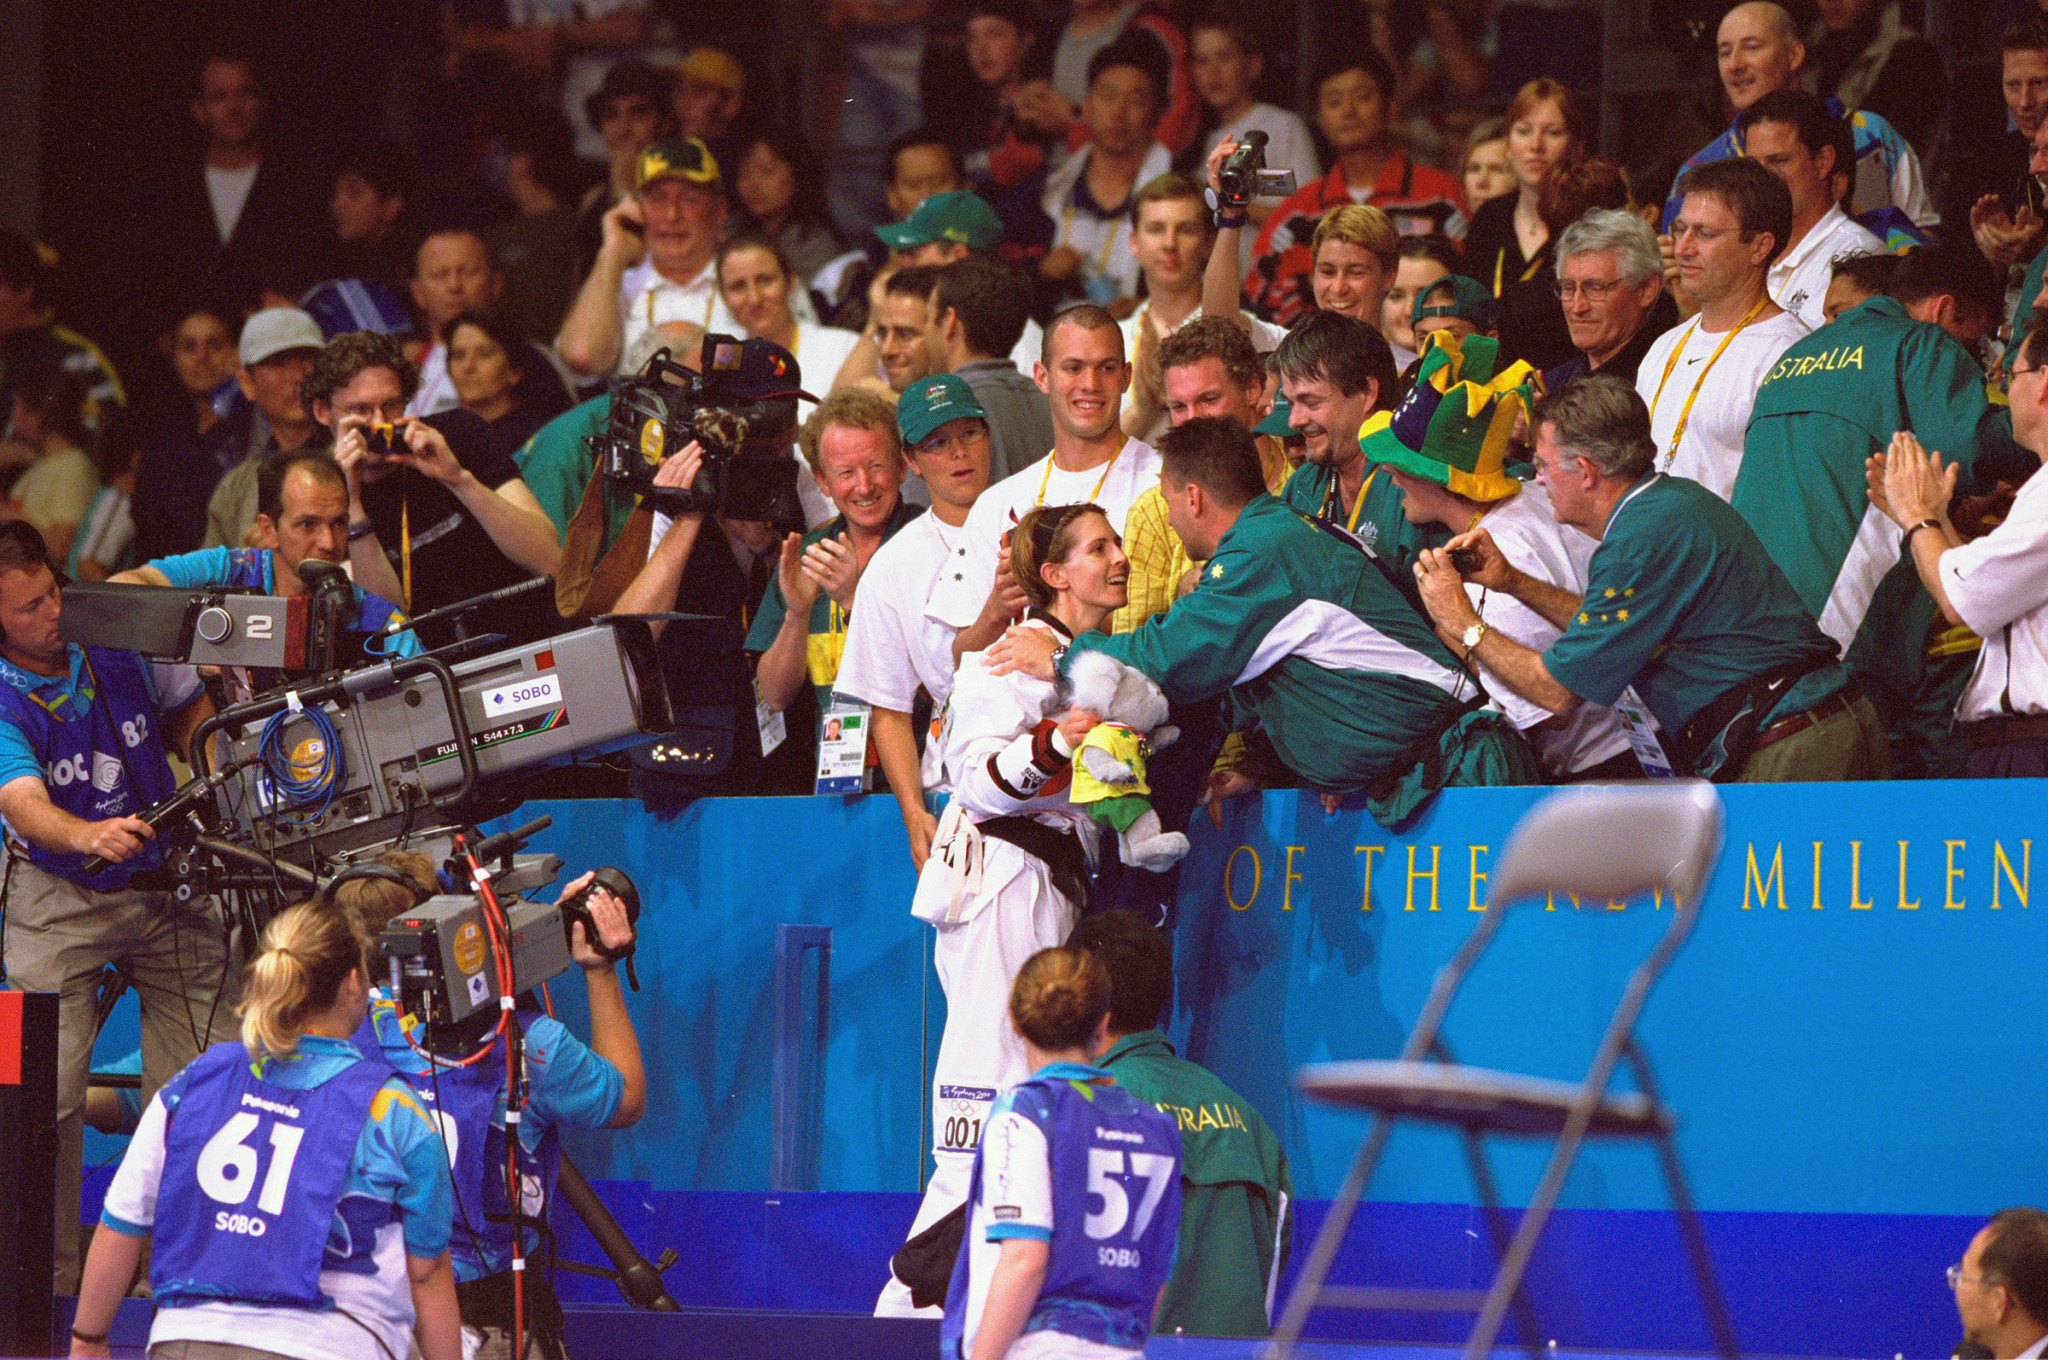 Lauren Burns' gold in 2000 was Australia's first in taekwondo ©Getty Images